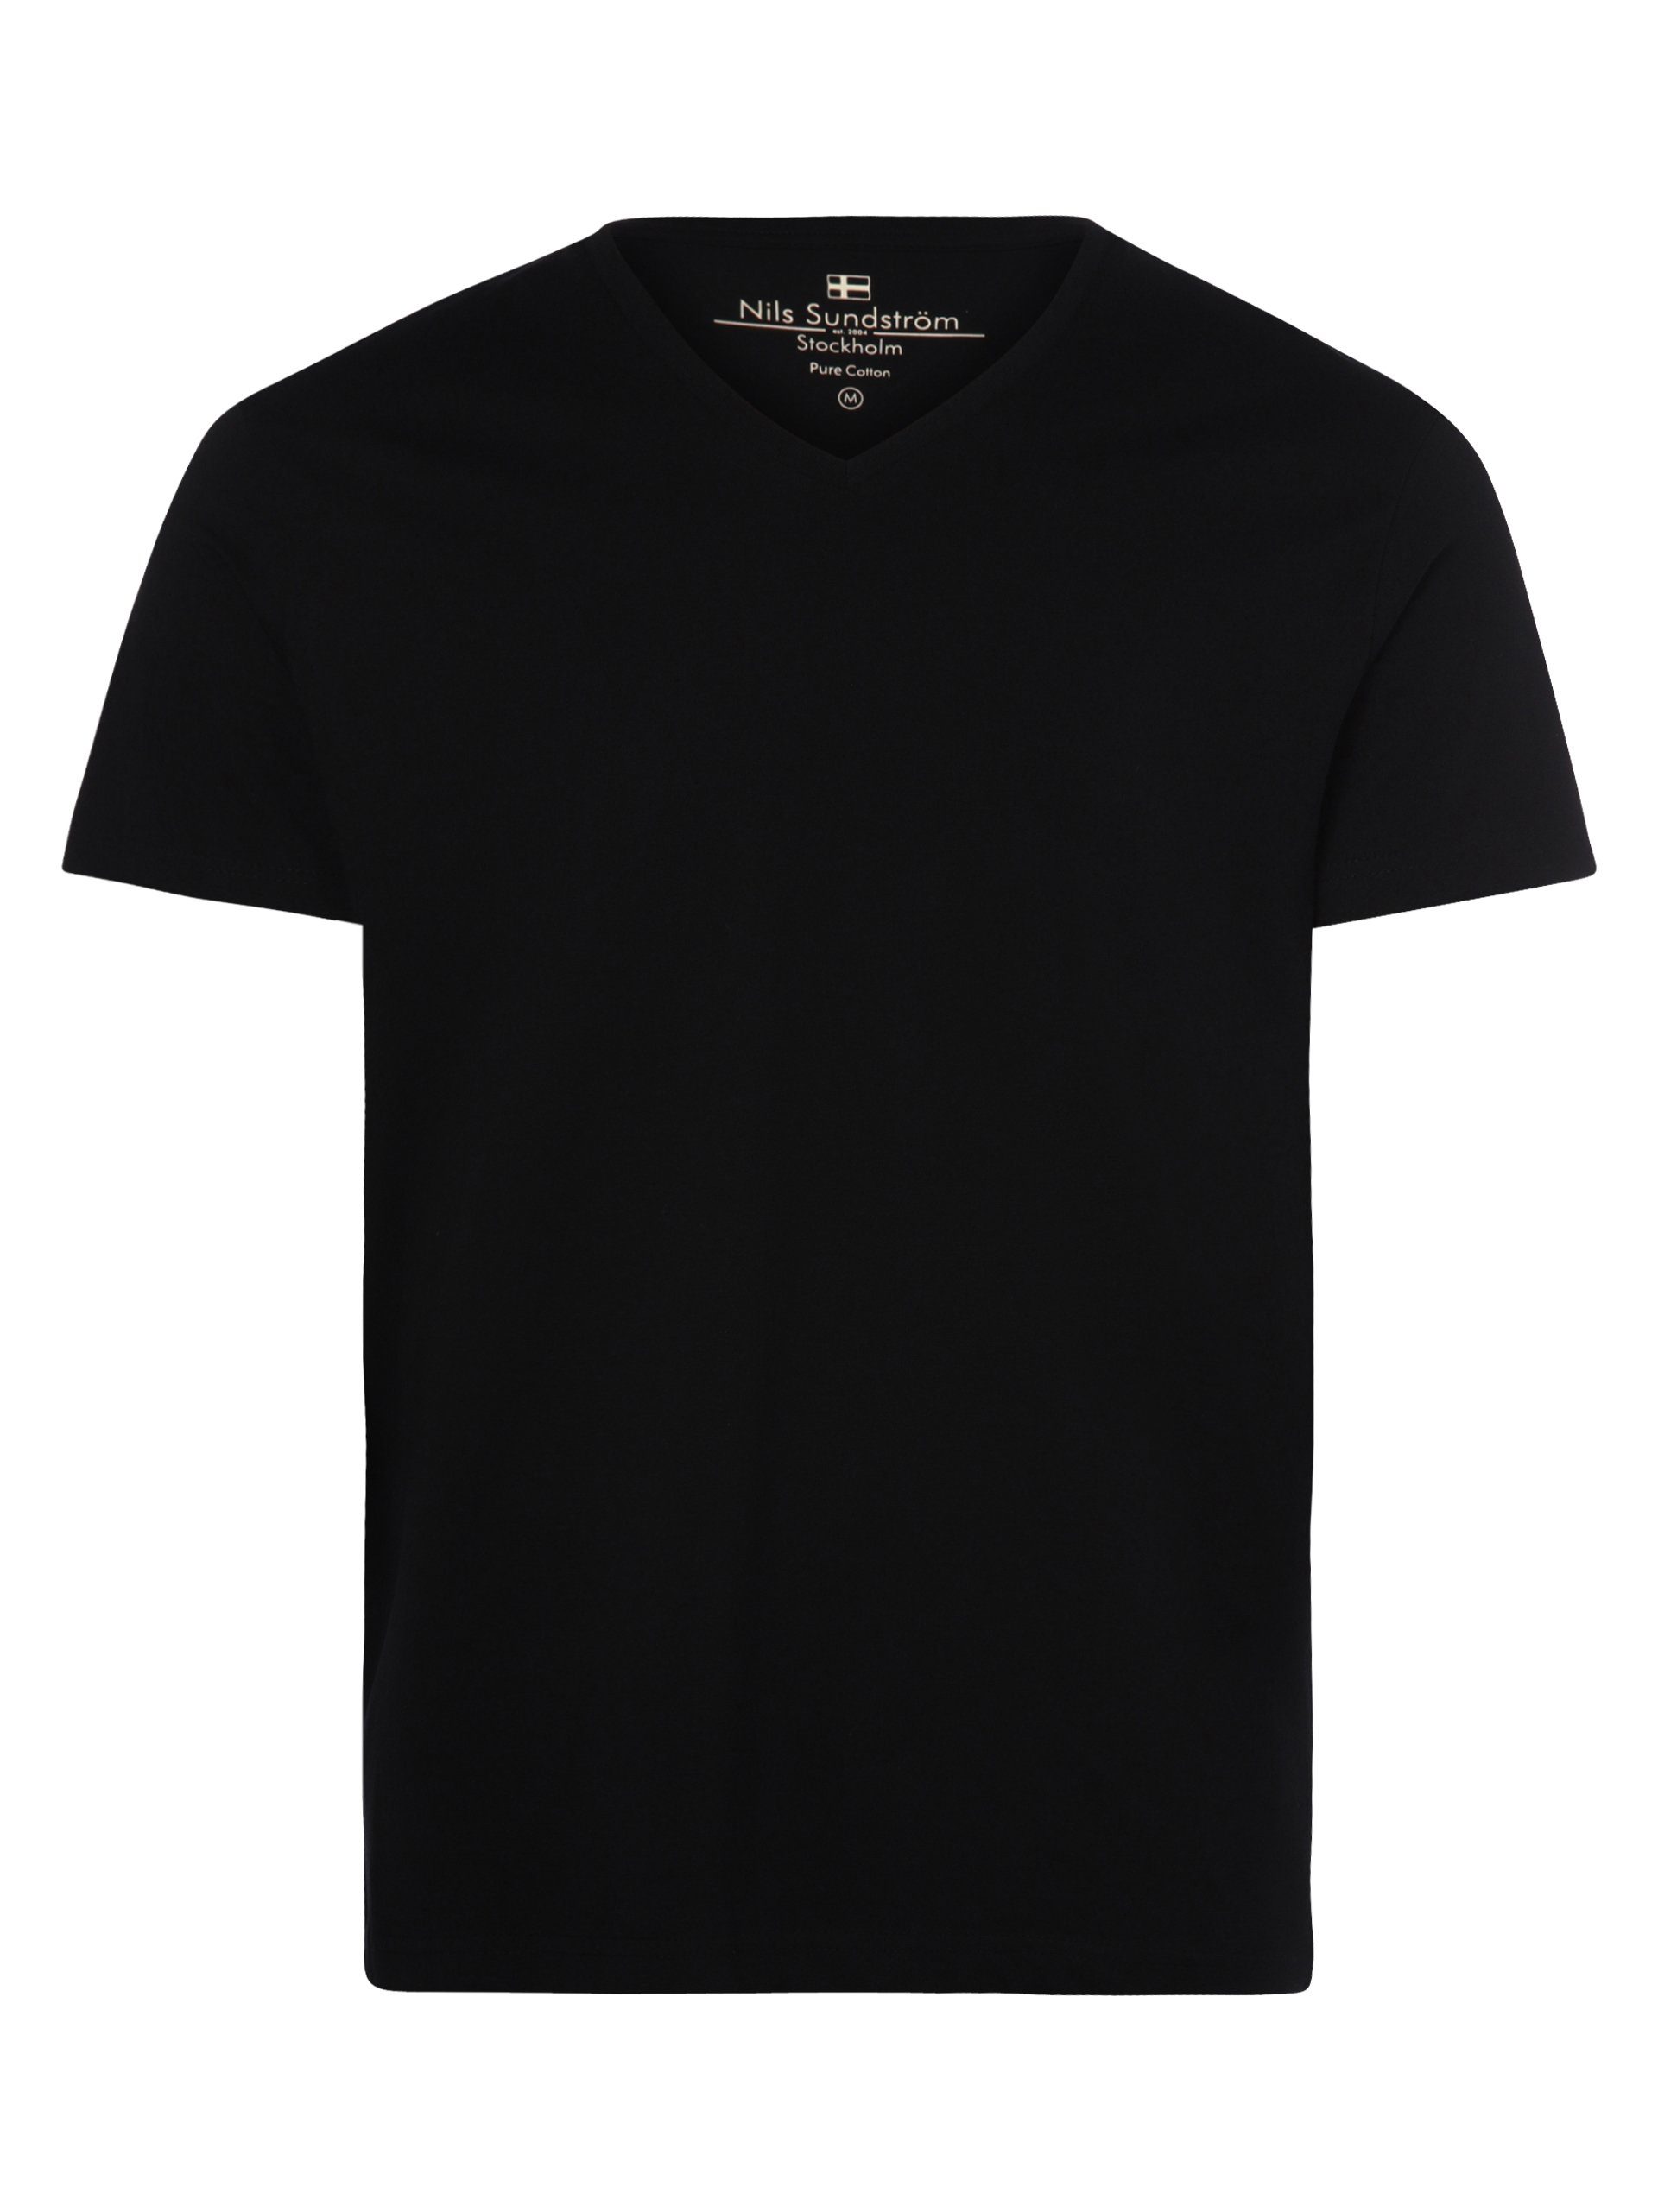 Sundström T-Shirt schwarz Nils